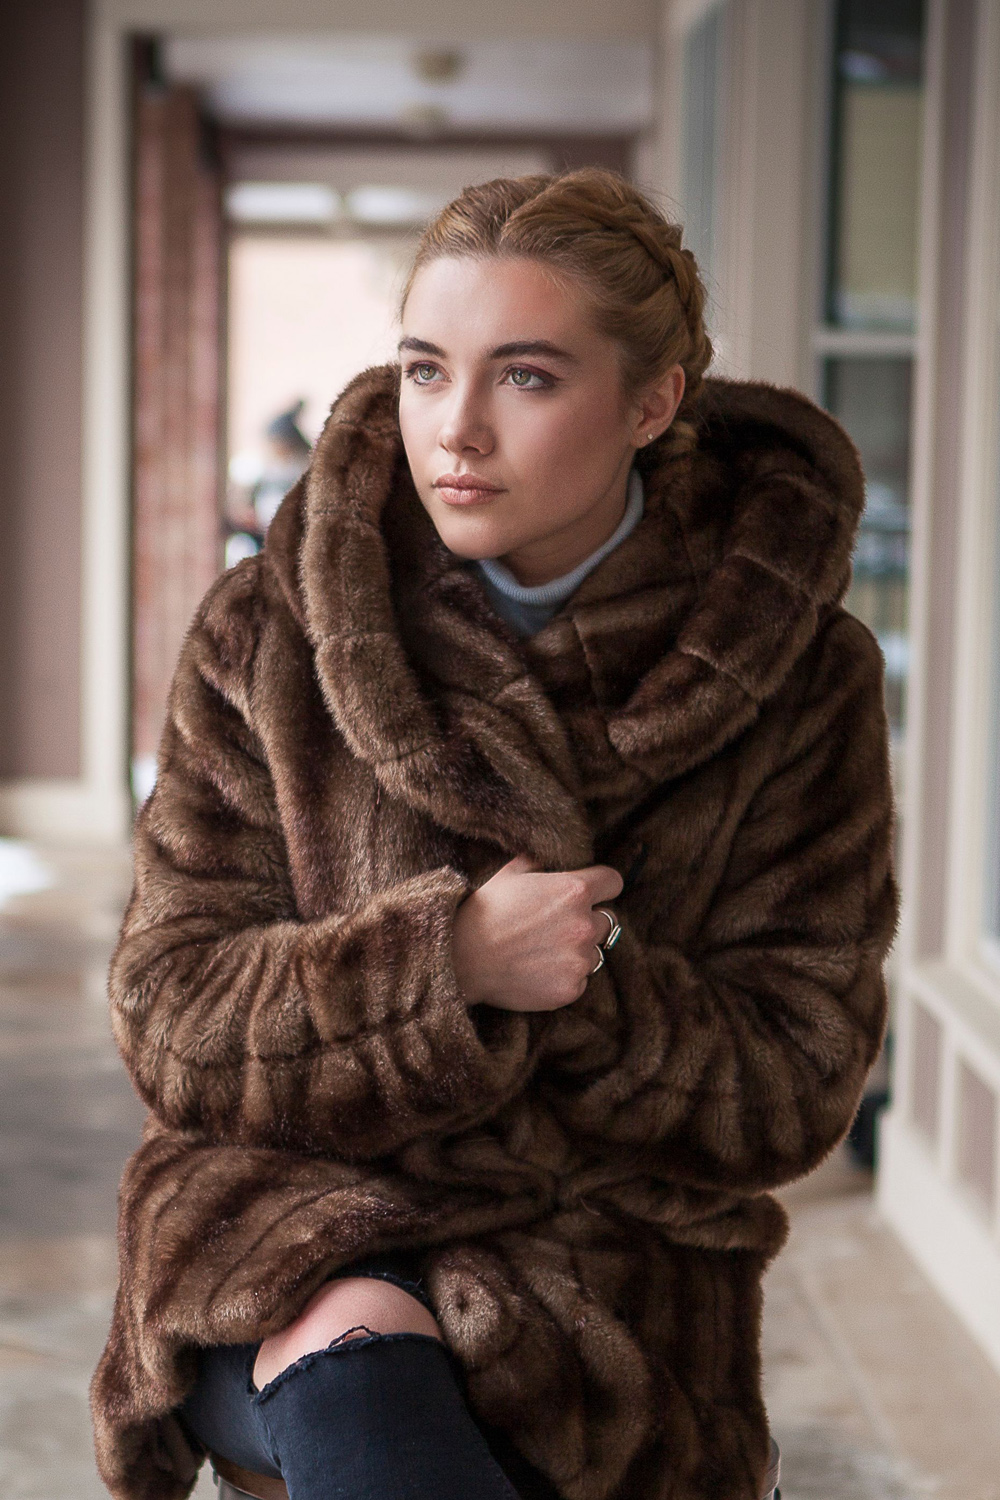 Florence Pugh Women Actress Green Eyes Depth Of Field Torn Clothes Fur Coats Fur Coats Brown